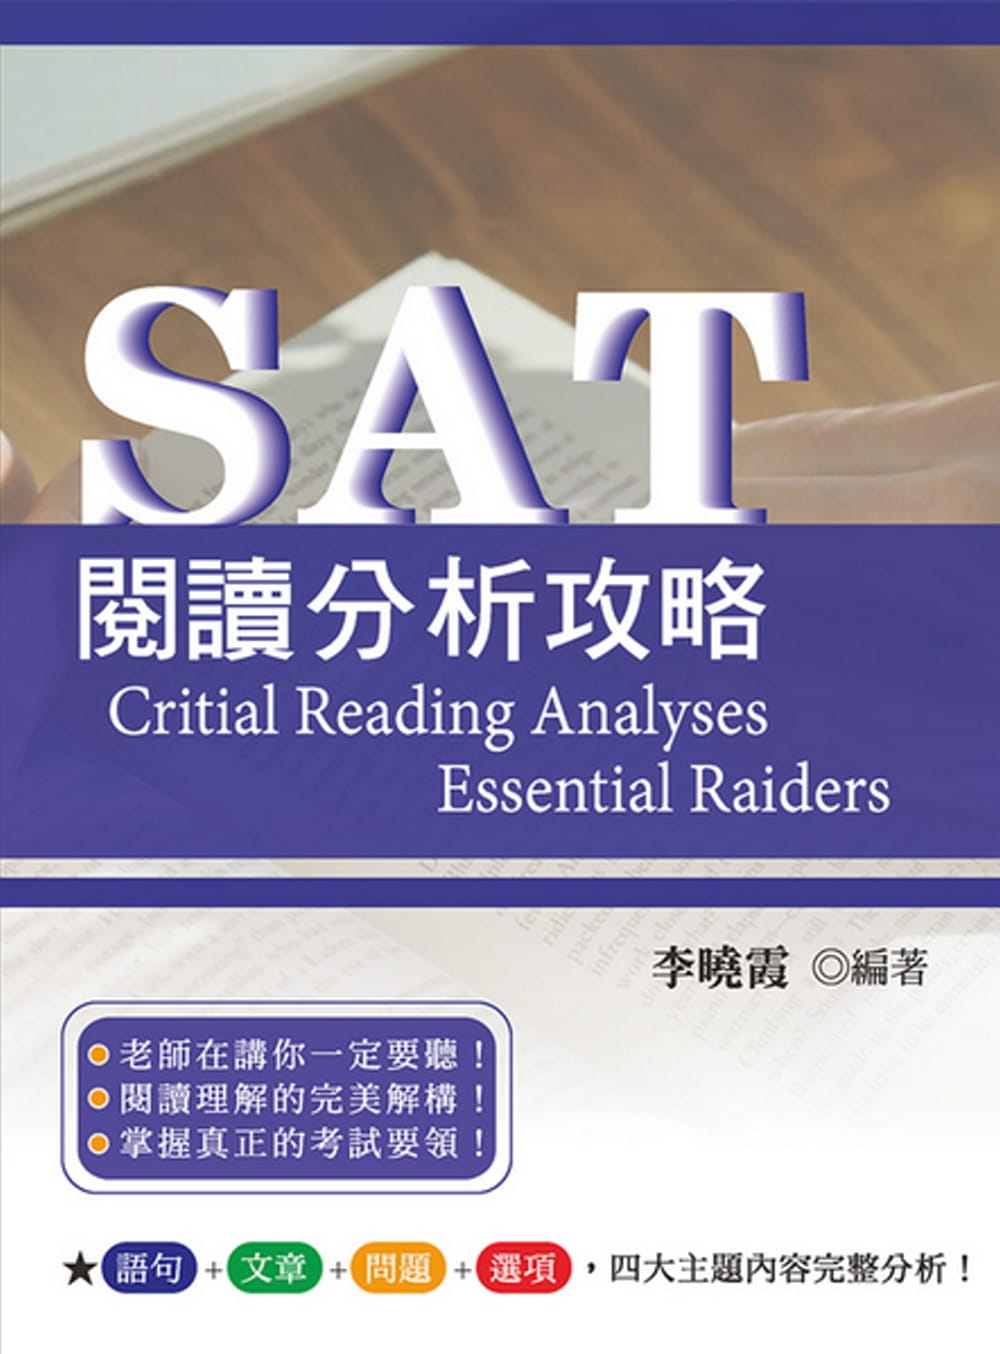 SAT閱讀分析攻略